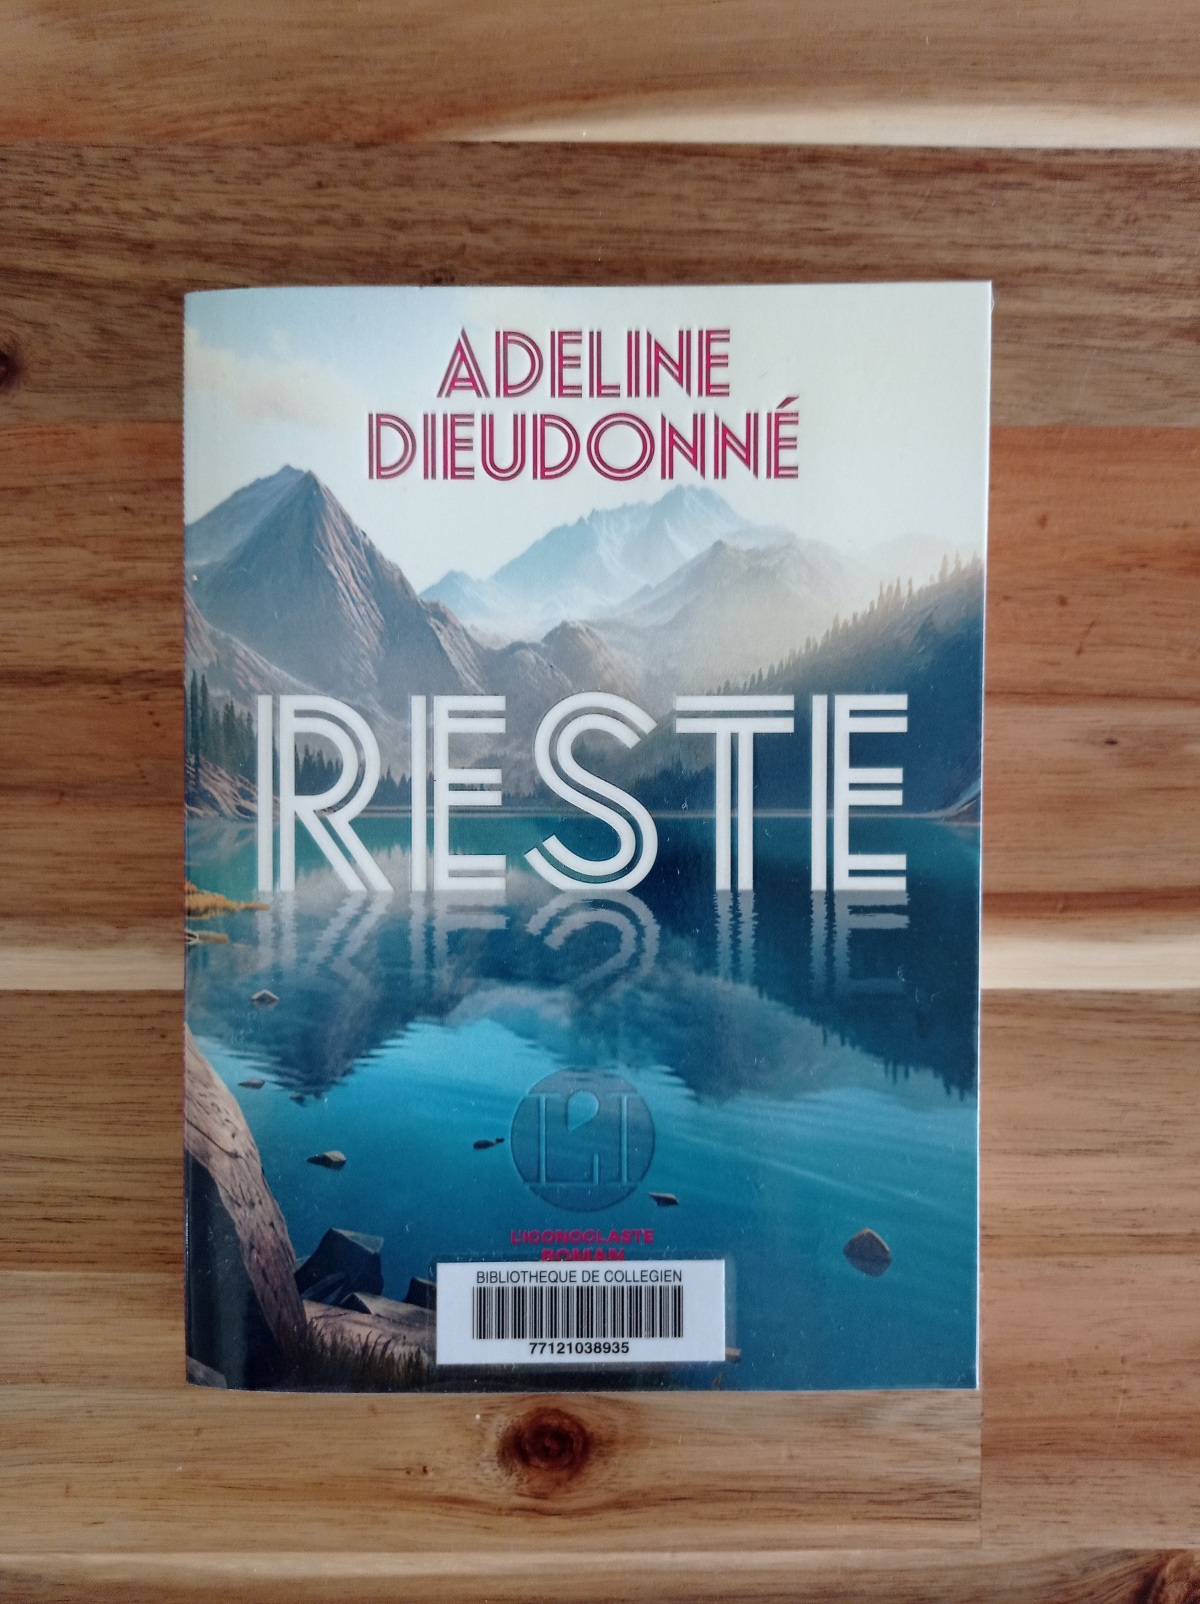 Reste / Adeline Dieudonné